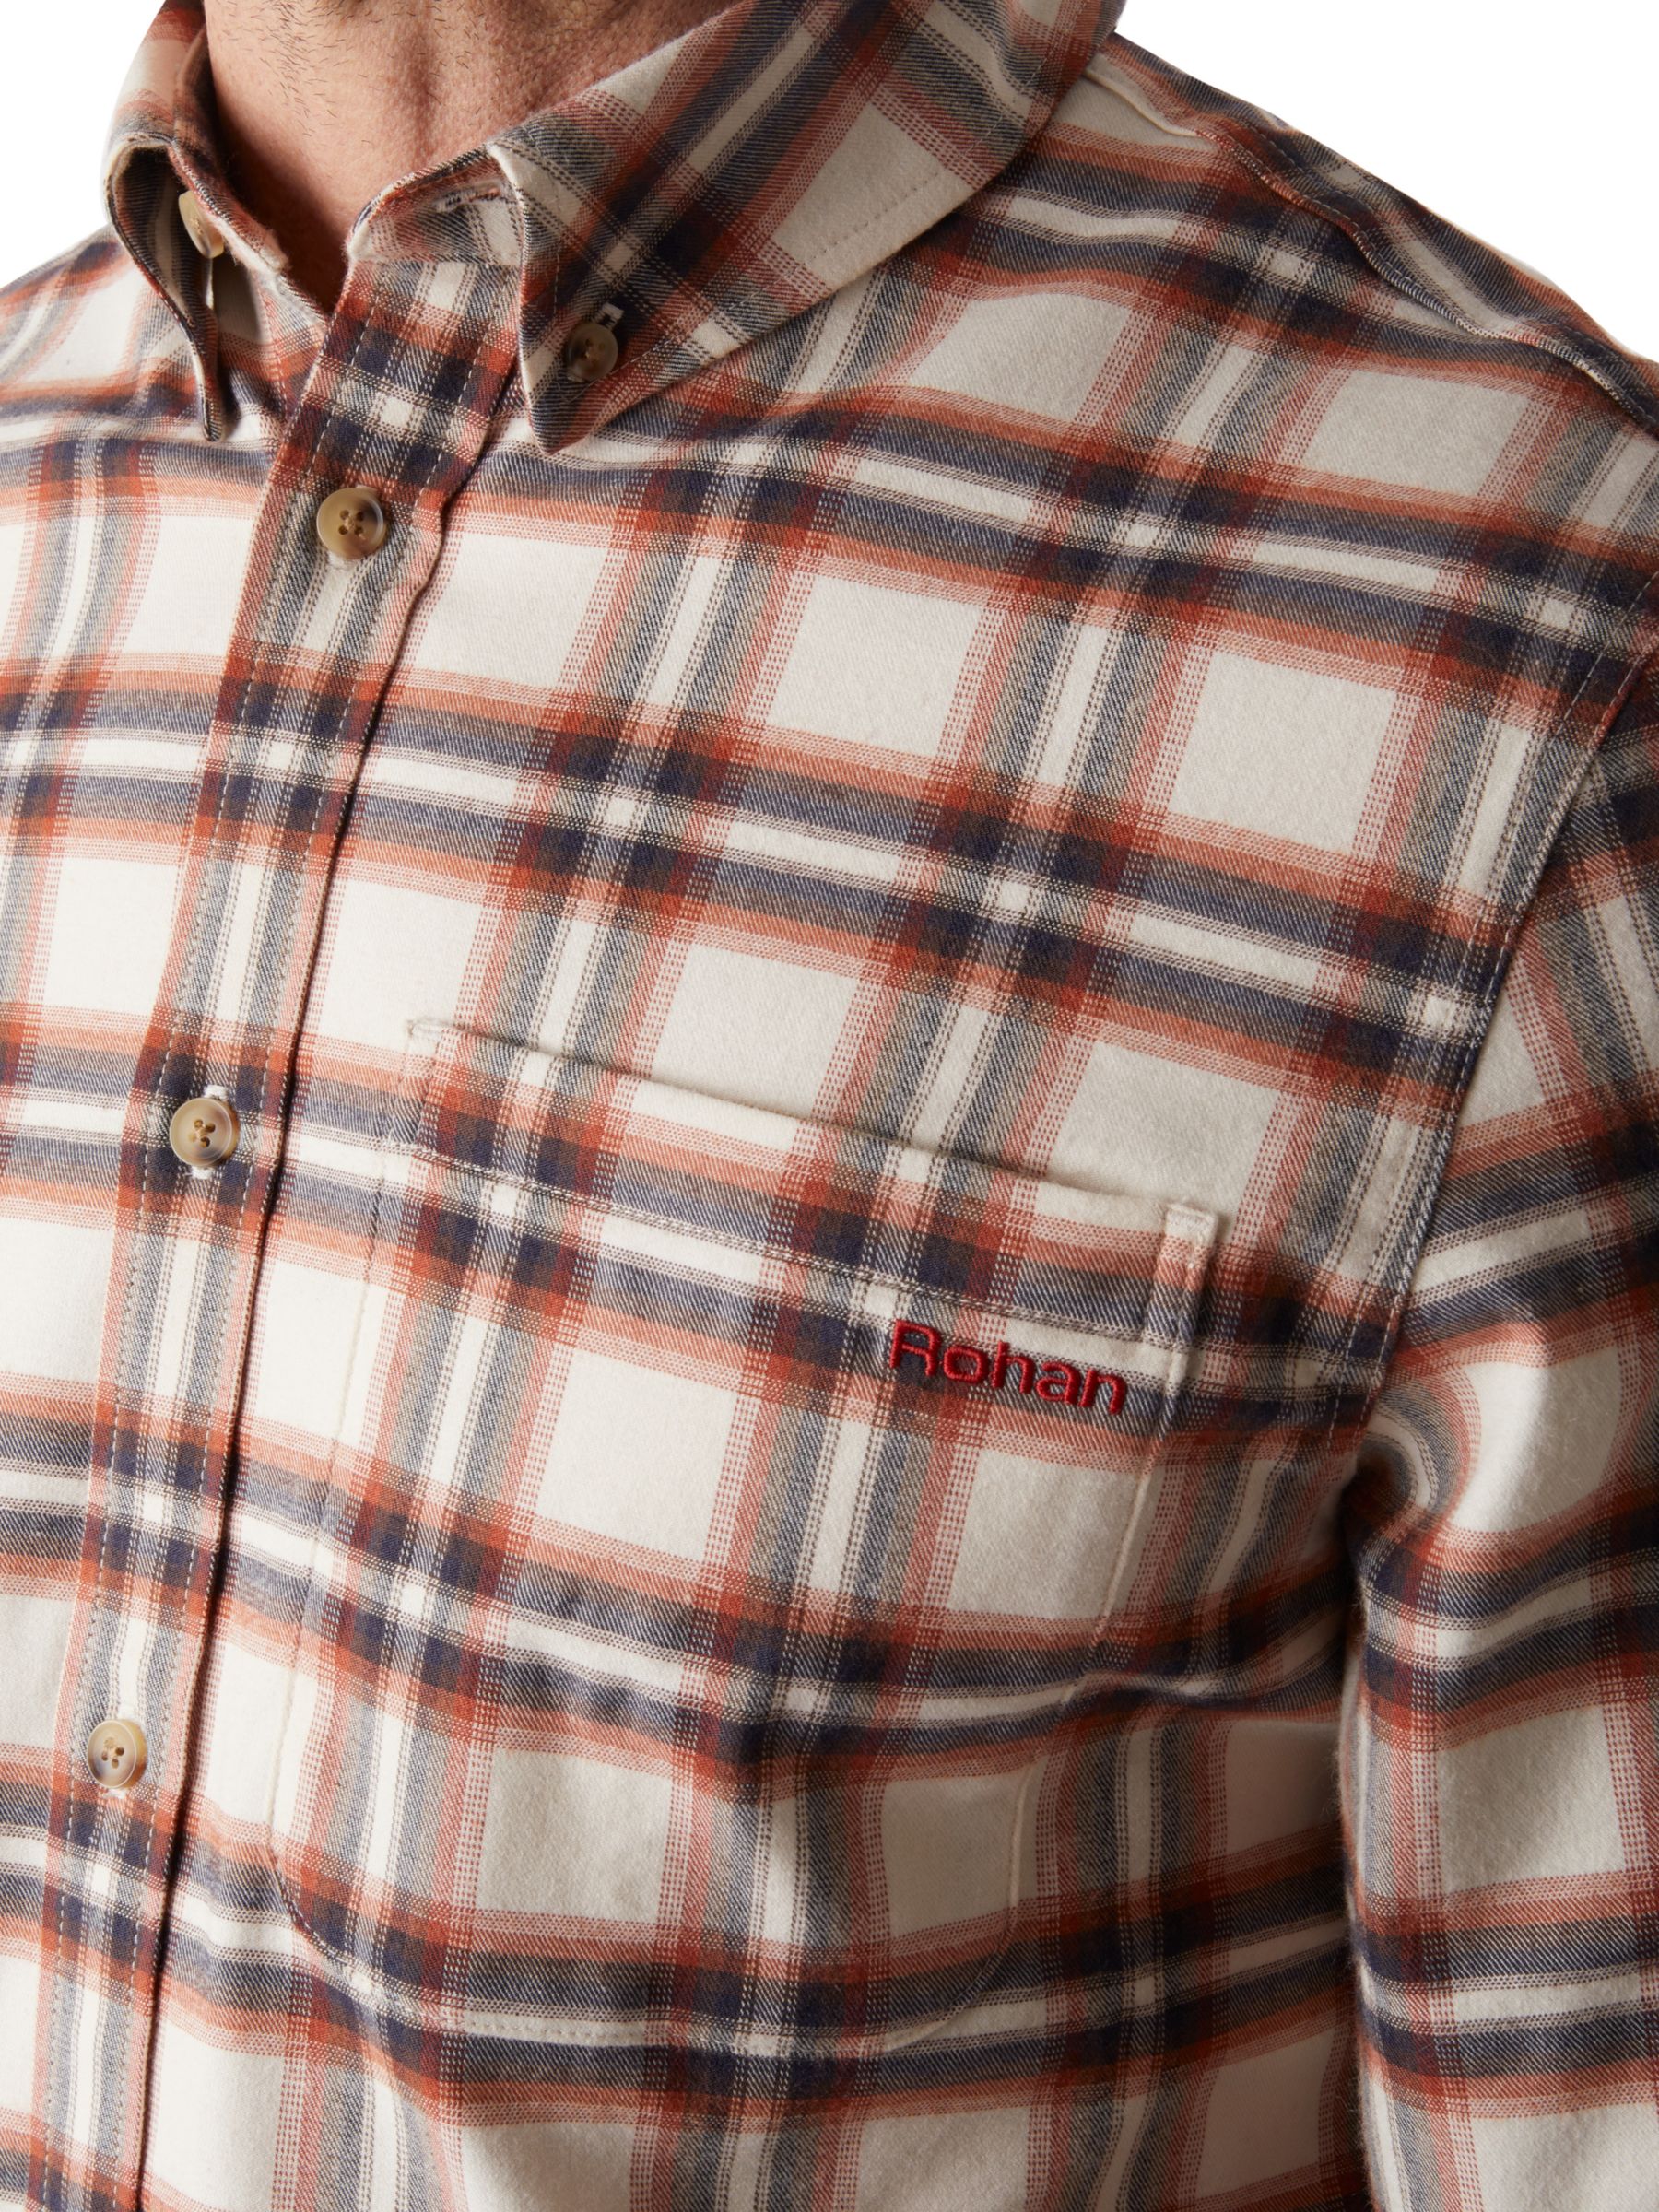 Rohan Dover Long Sleeve Check Shirt, Ecru/Red, S